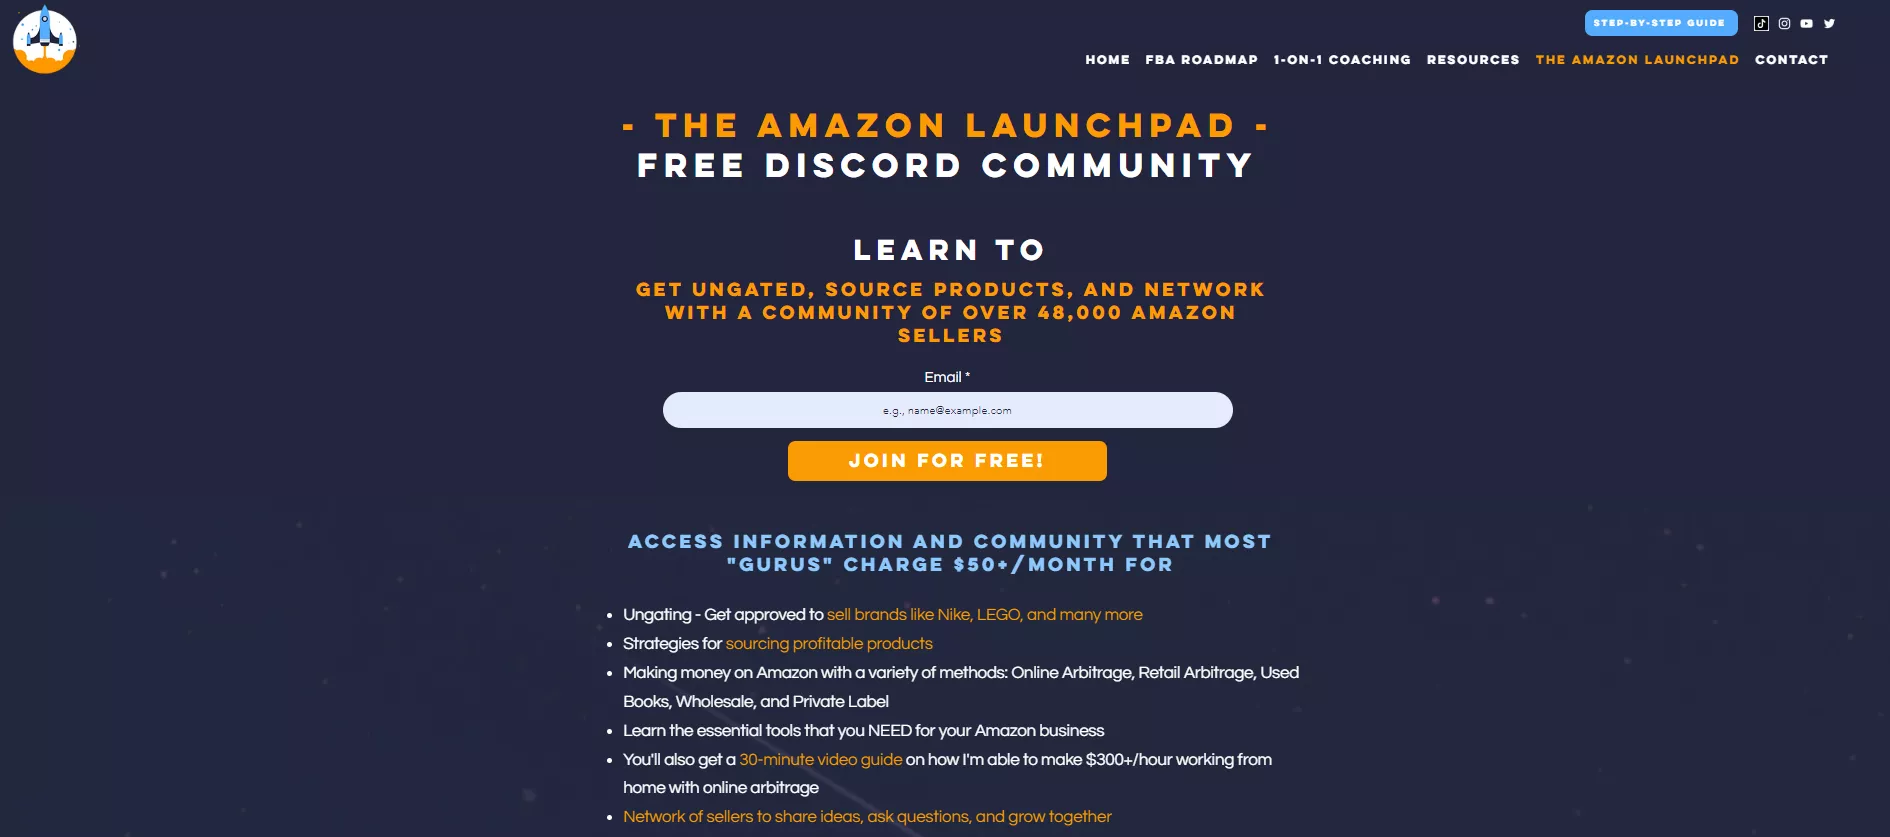 The Amazon Launchpad Discord FBA Roadmap Course